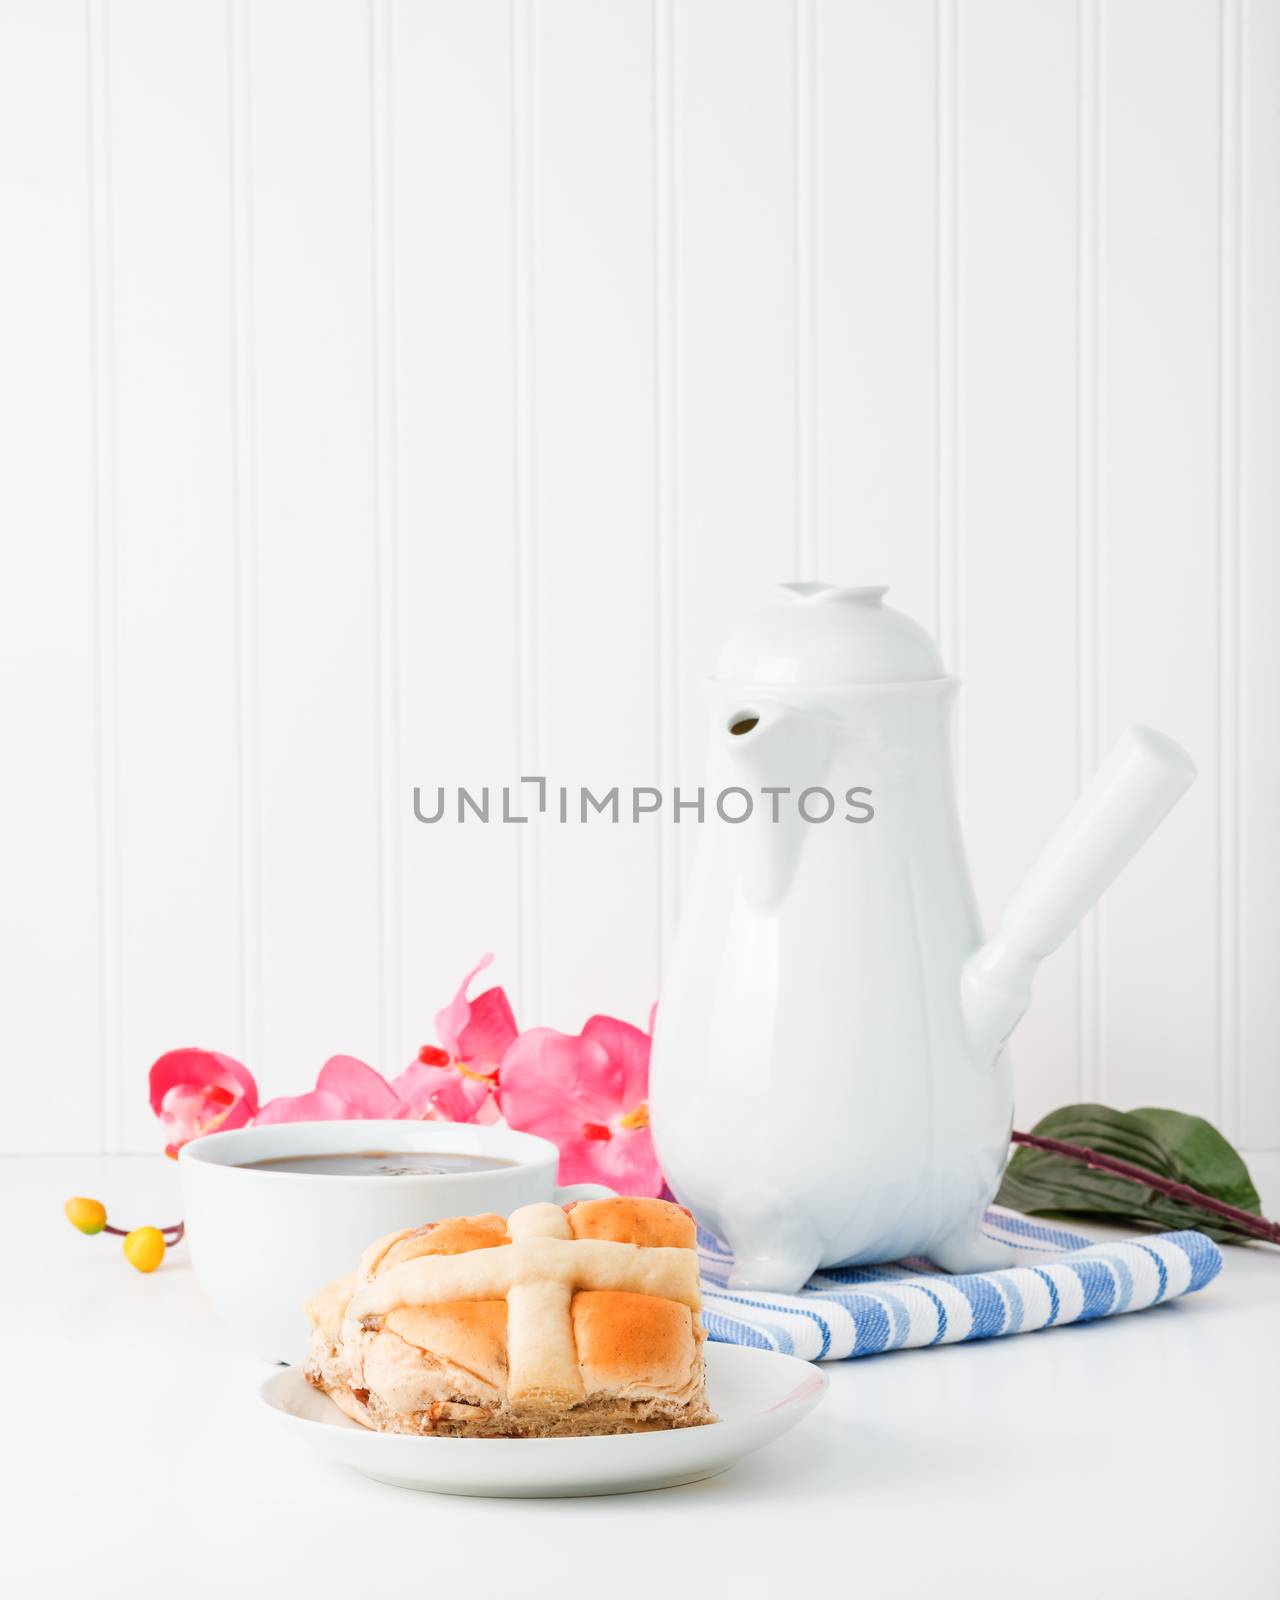 Hot Cross Bun and Tea by billberryphotography